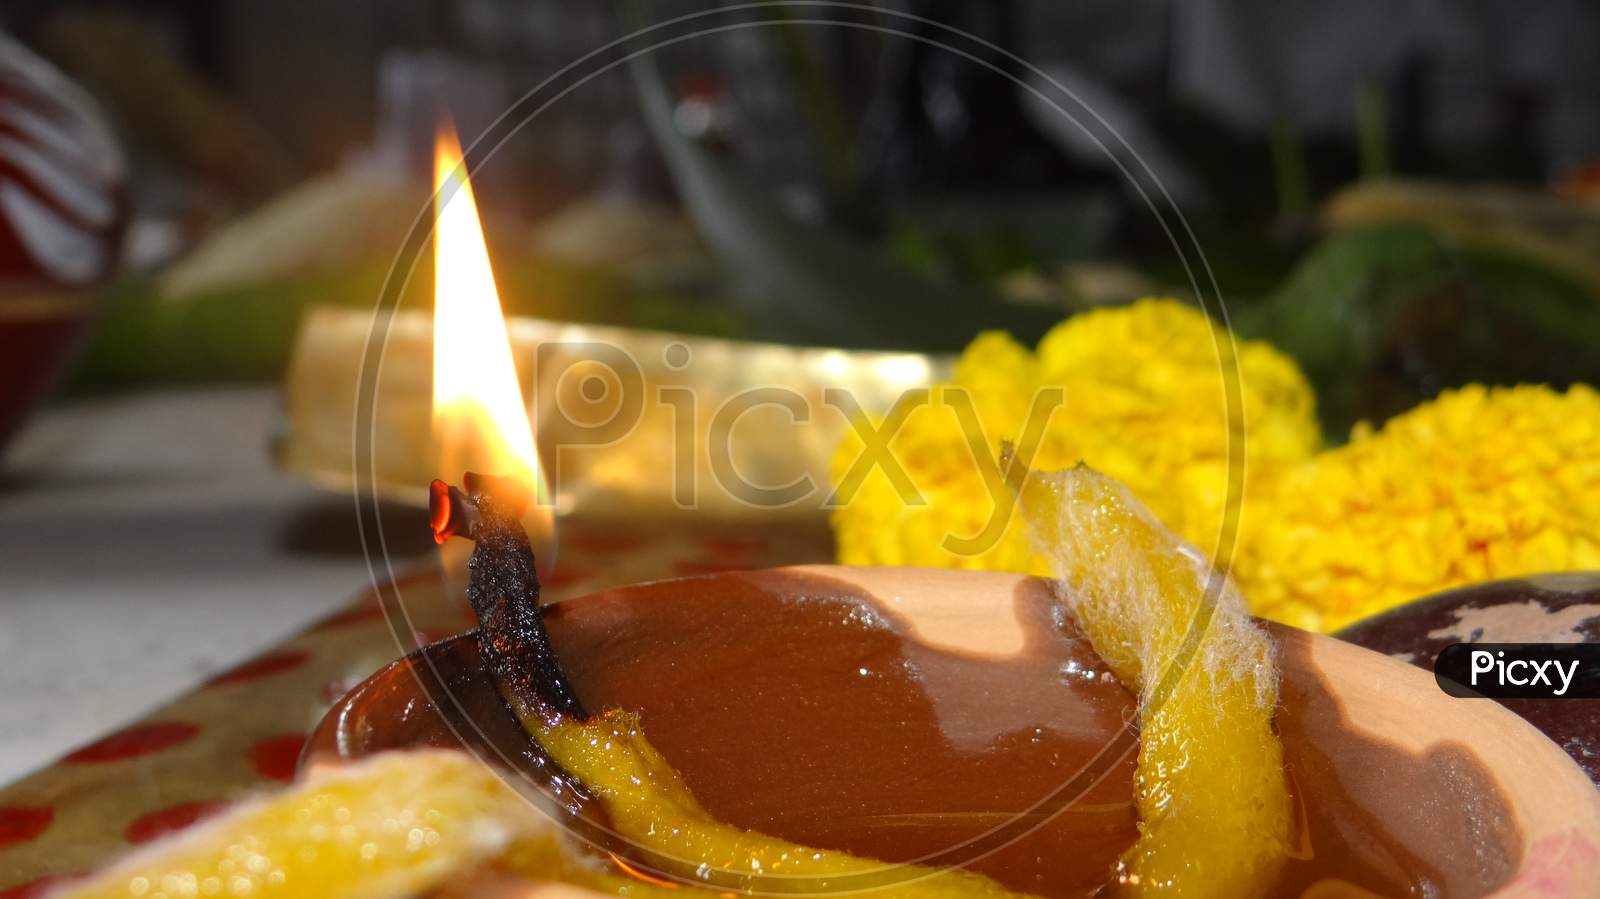 Oil Lamp Is Glowing In An Indian Wedding Diwali Festival